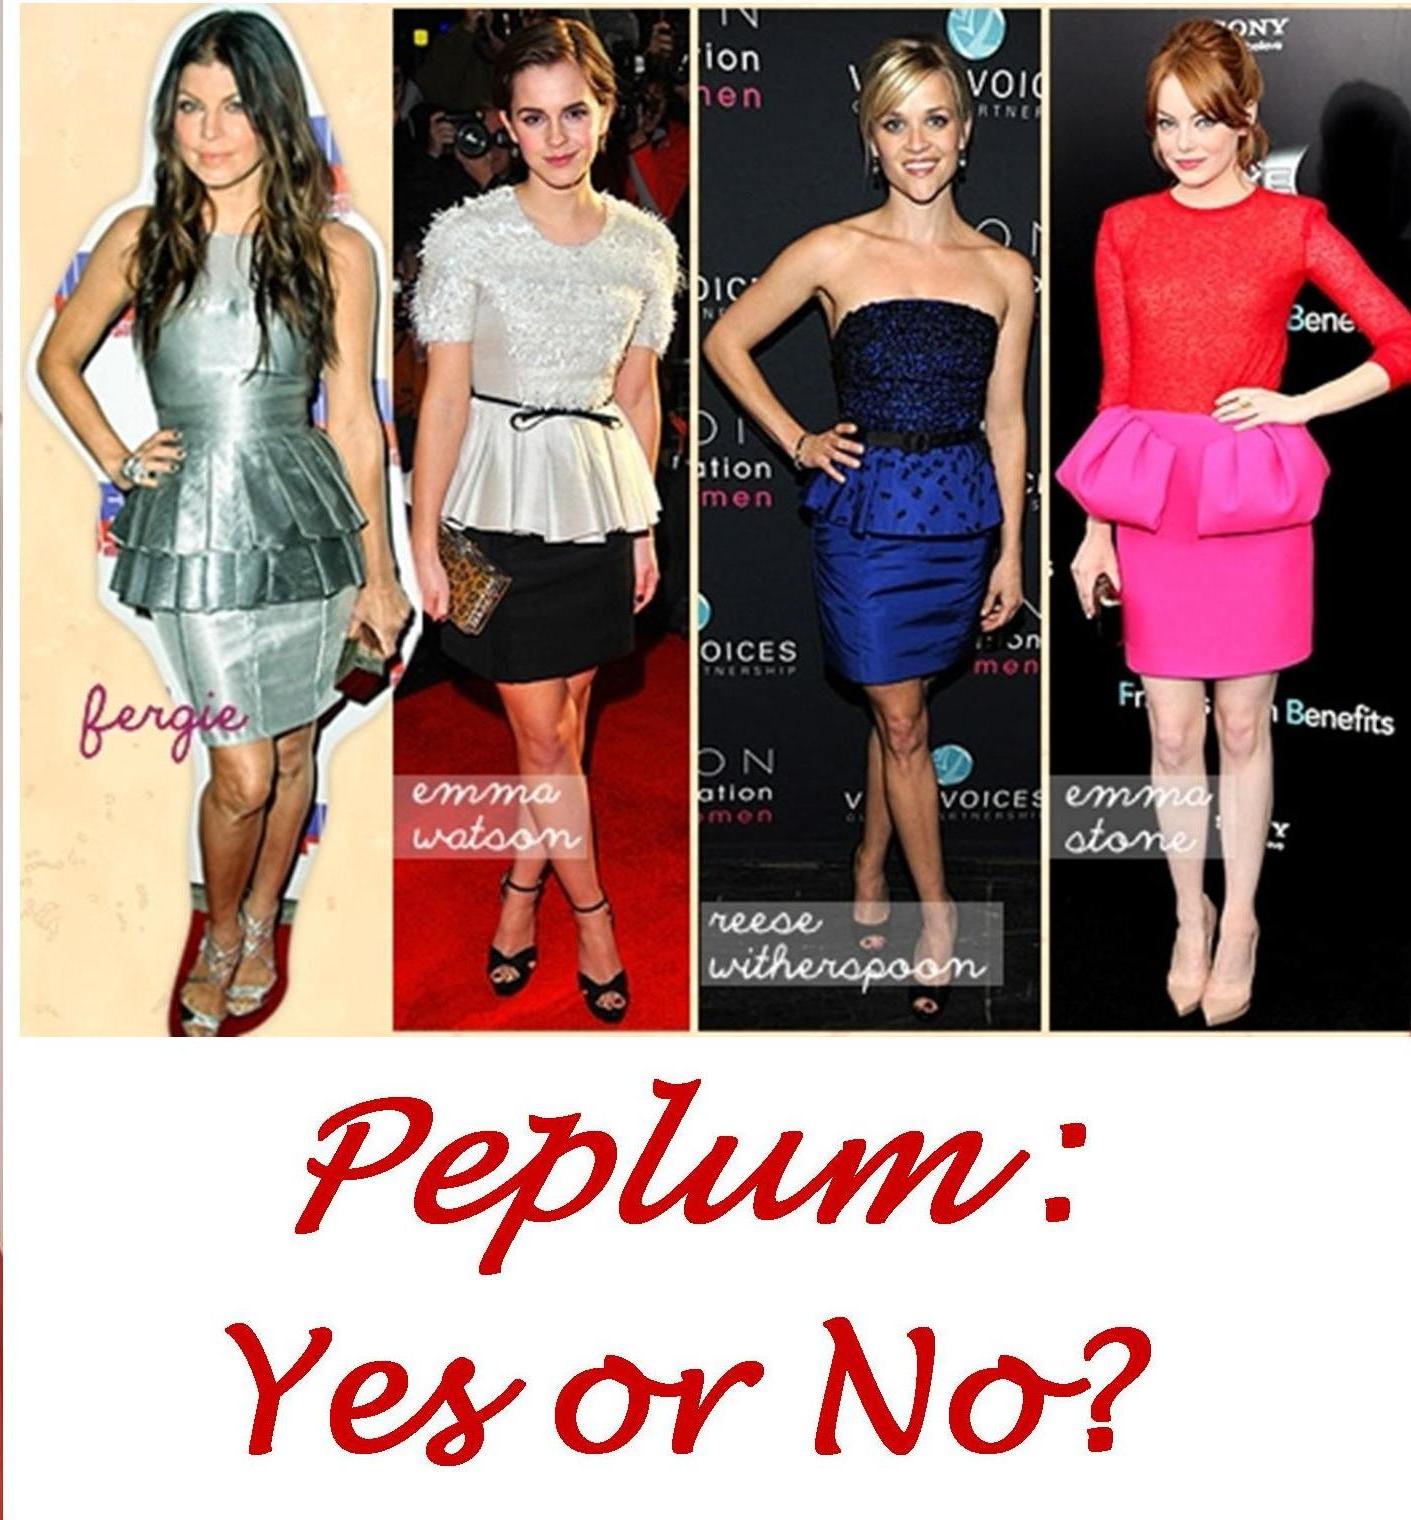 Peplum-Yes-or-No1 (1)